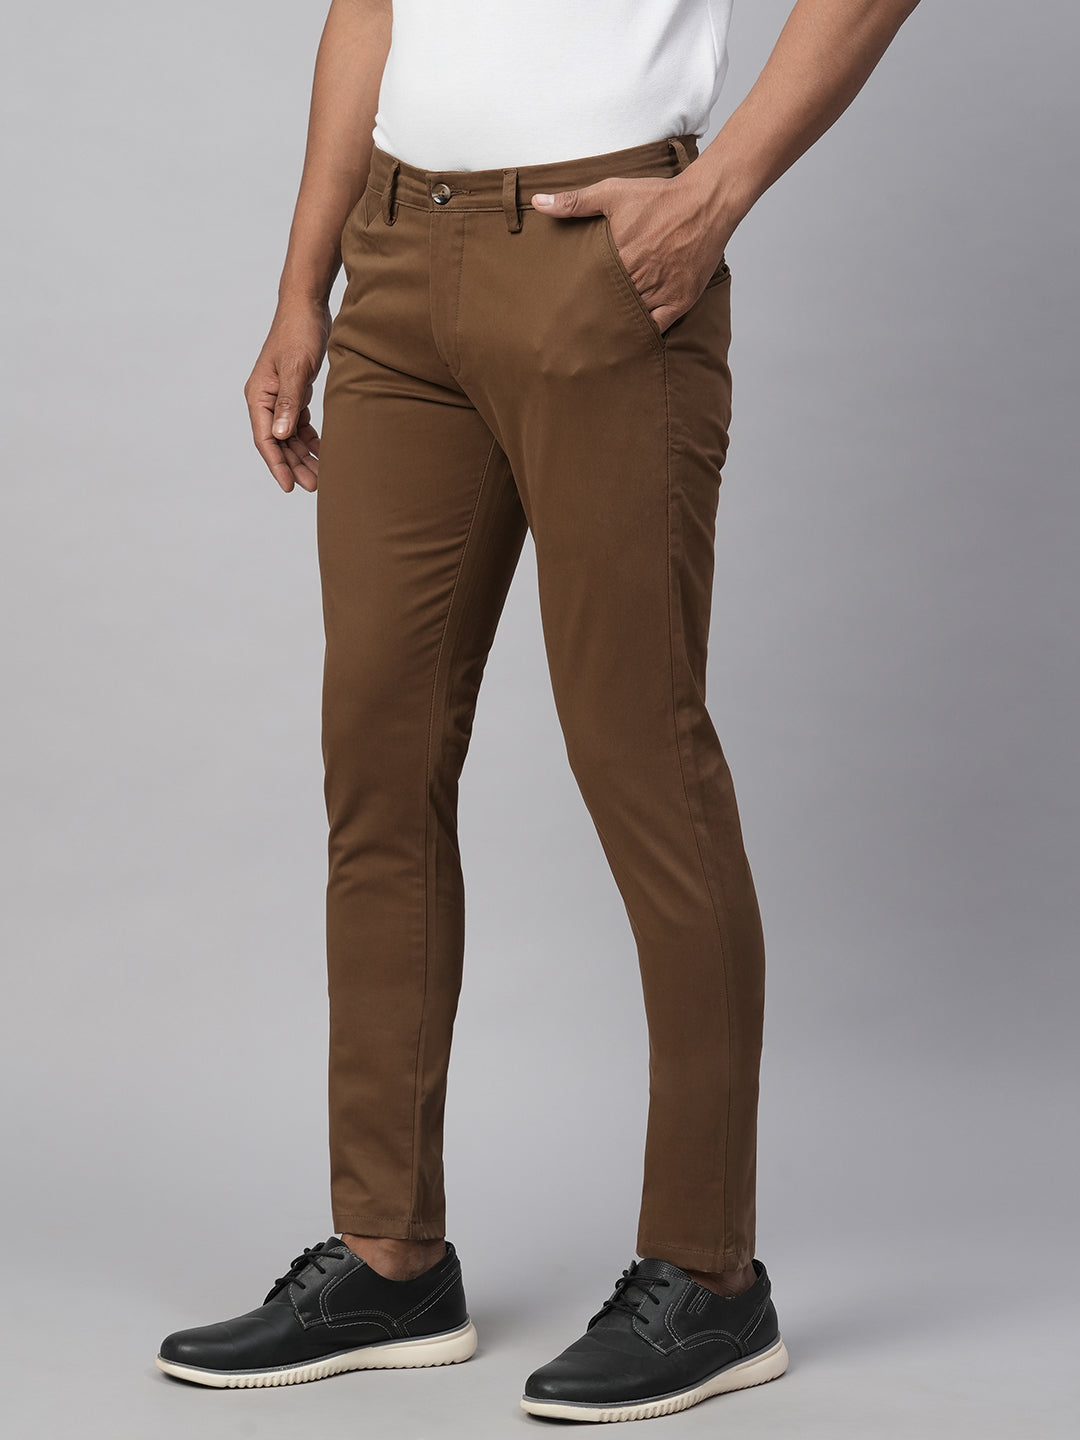 Genips Men's Slim Fit Cotton Stretch Casual Trouser Coffee Color